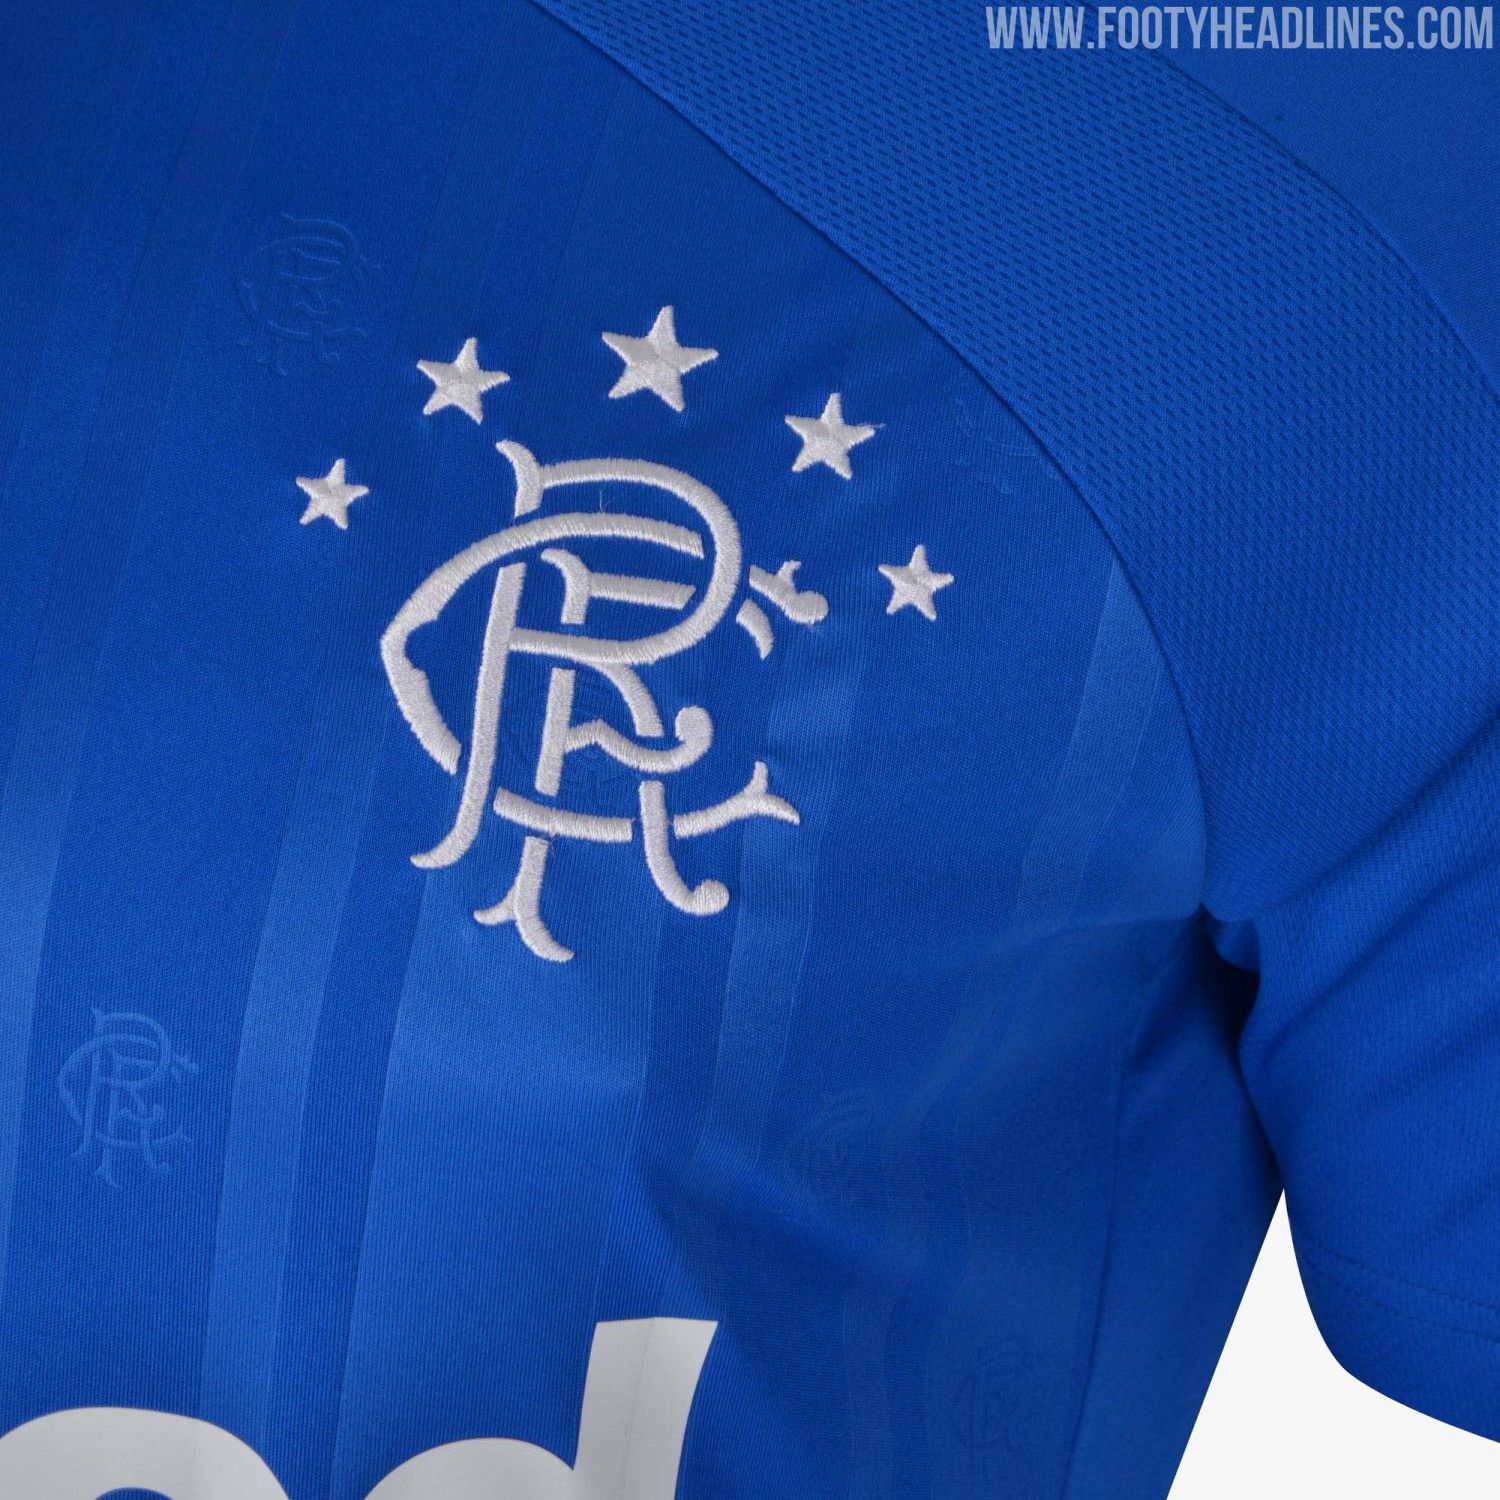 Rangers 22-23 Home Kit Revealed - Footy Headlines